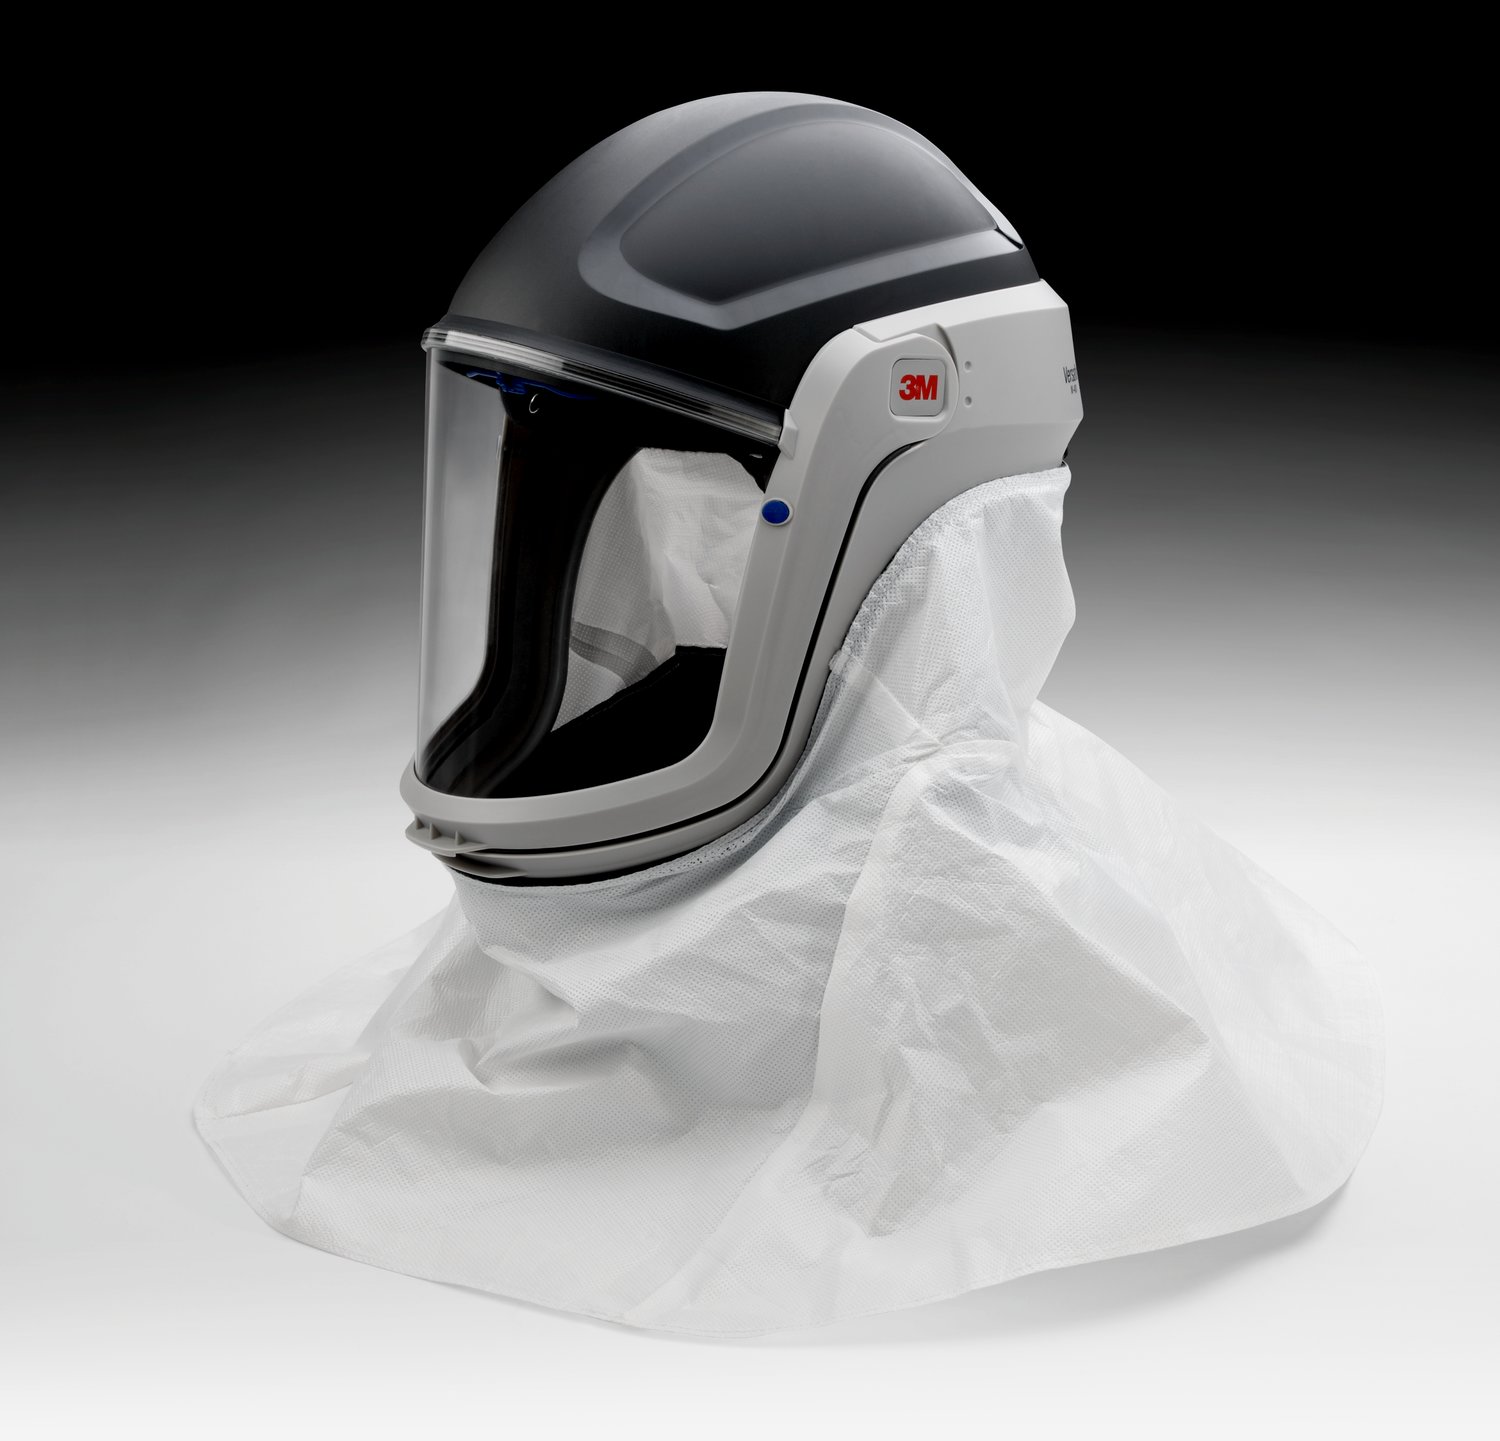 7100009447 - 3M Versaflo Respiratory Helmet Assembly M-405, with Standard Visor and
Shroud, 1 EA/Case